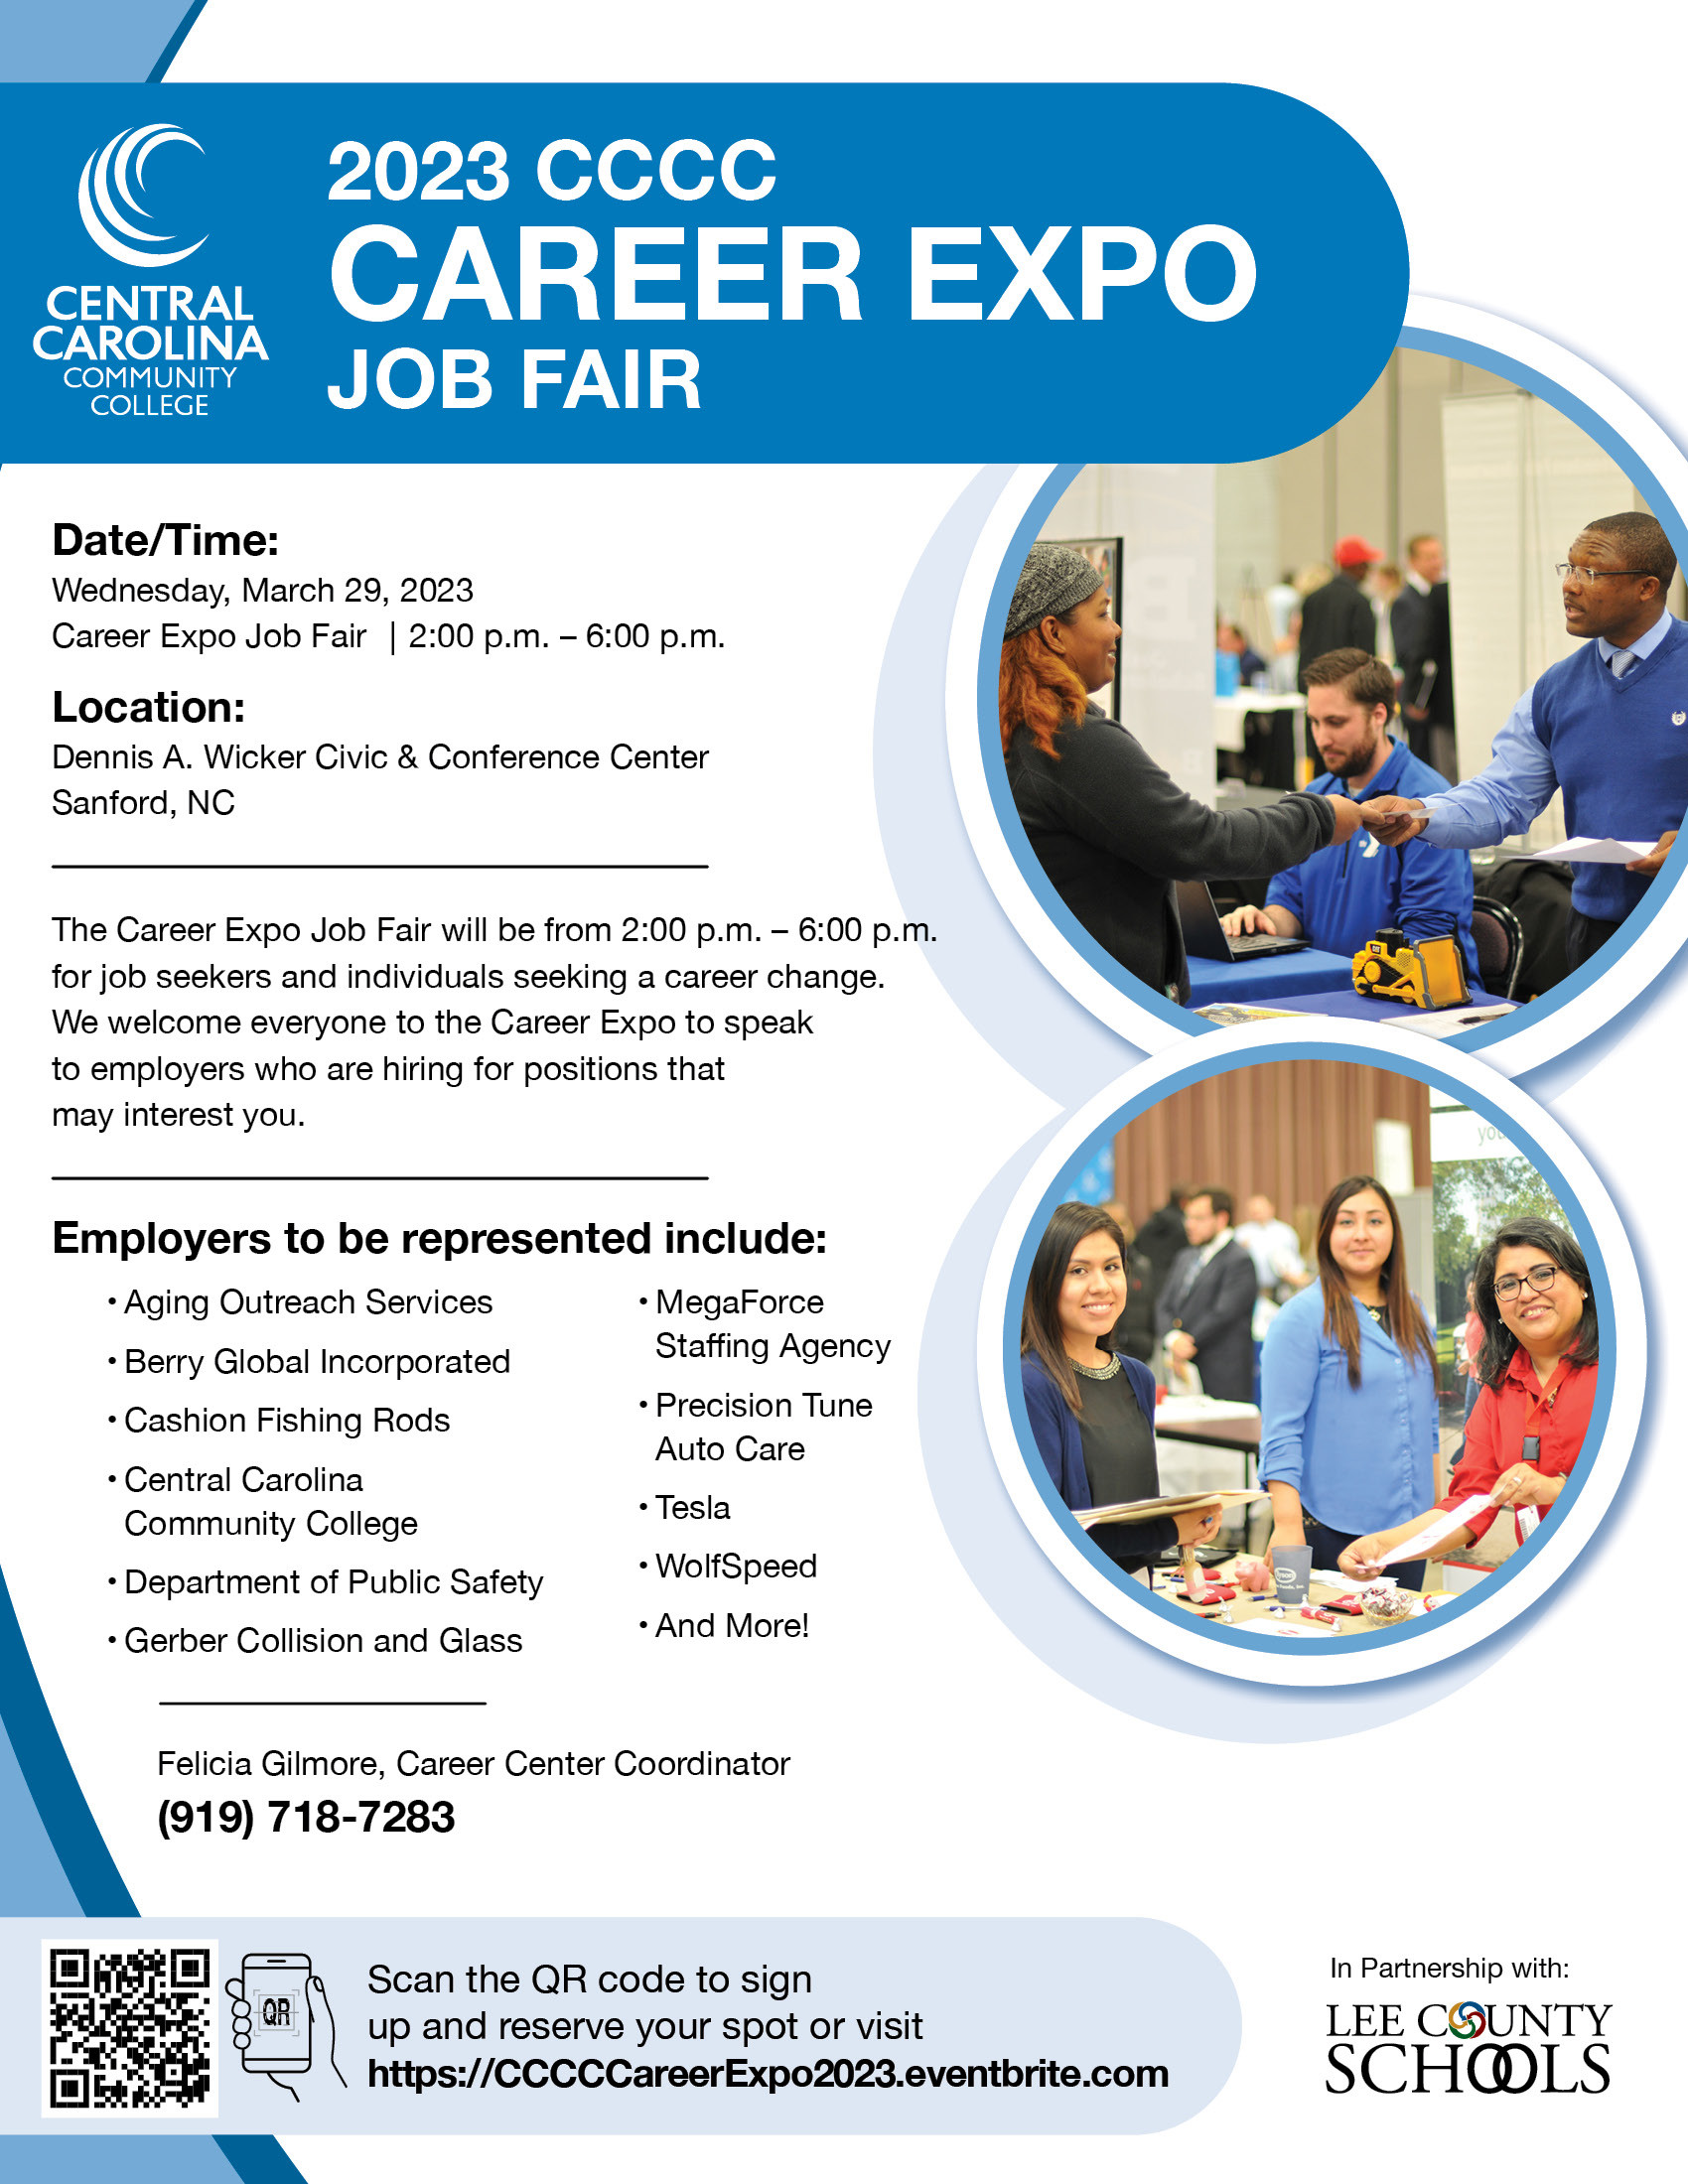 Career Center, CCCC - Central Carolina Community College